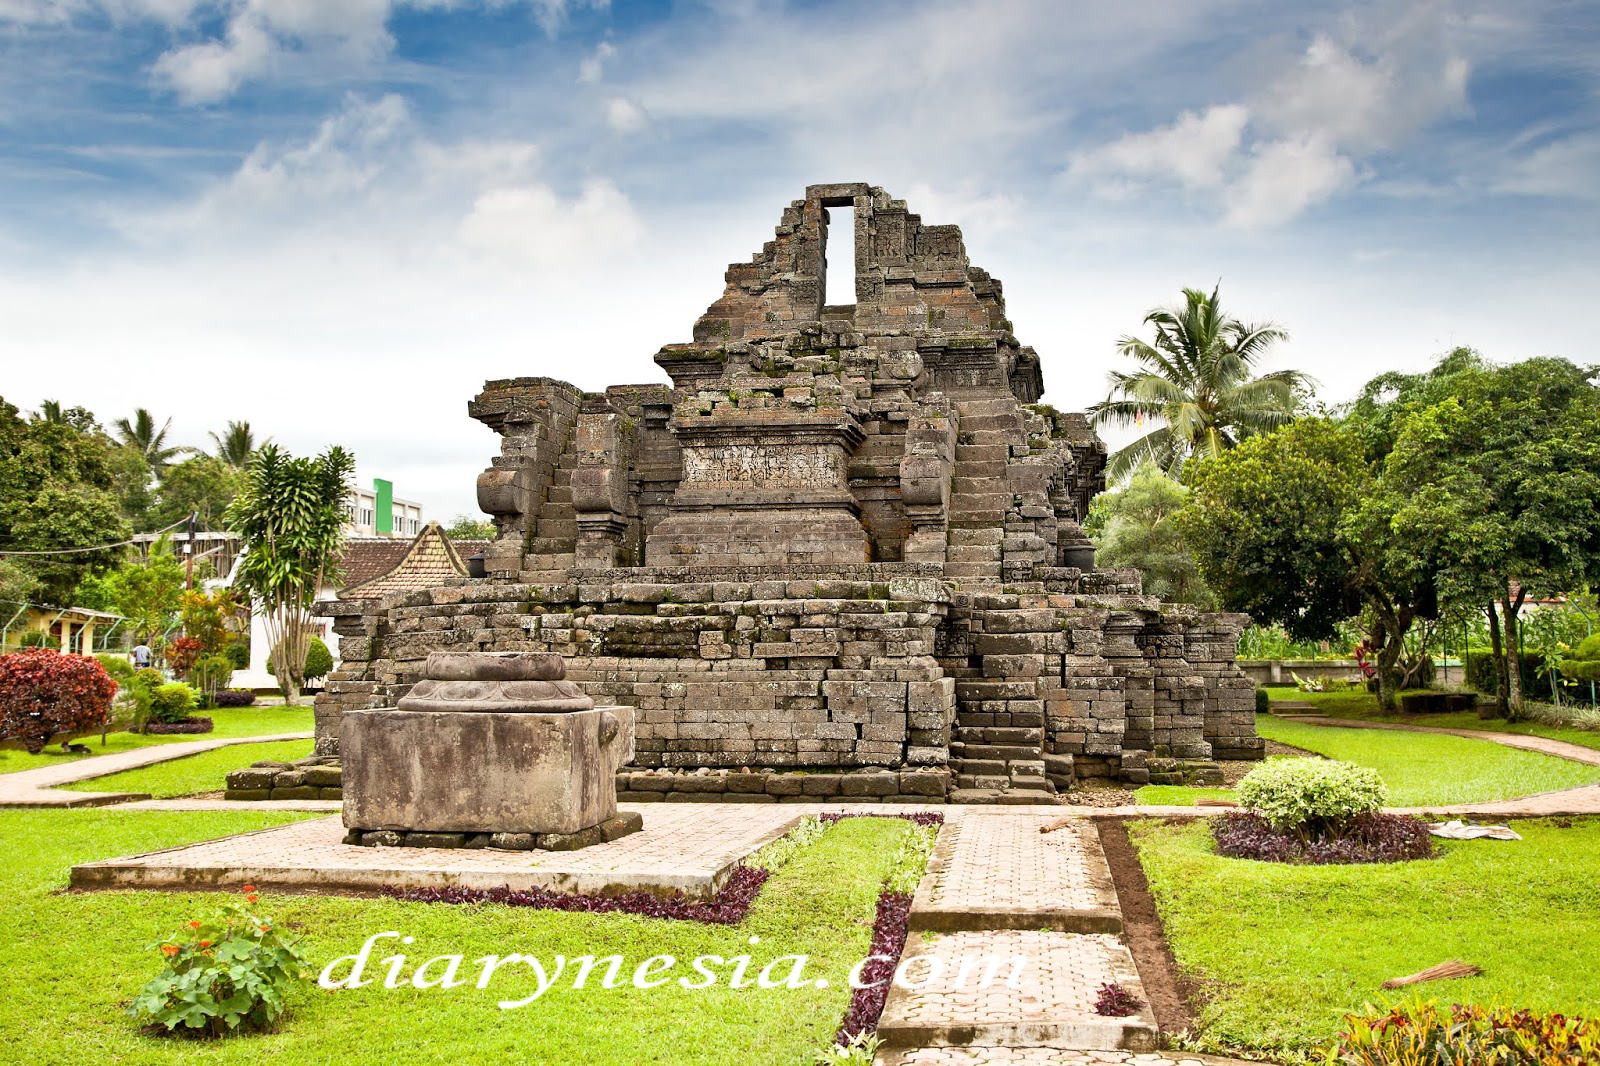 Famous Temples Tourism, East Java Tourism, Majapahit heritage Temples, diarynesia